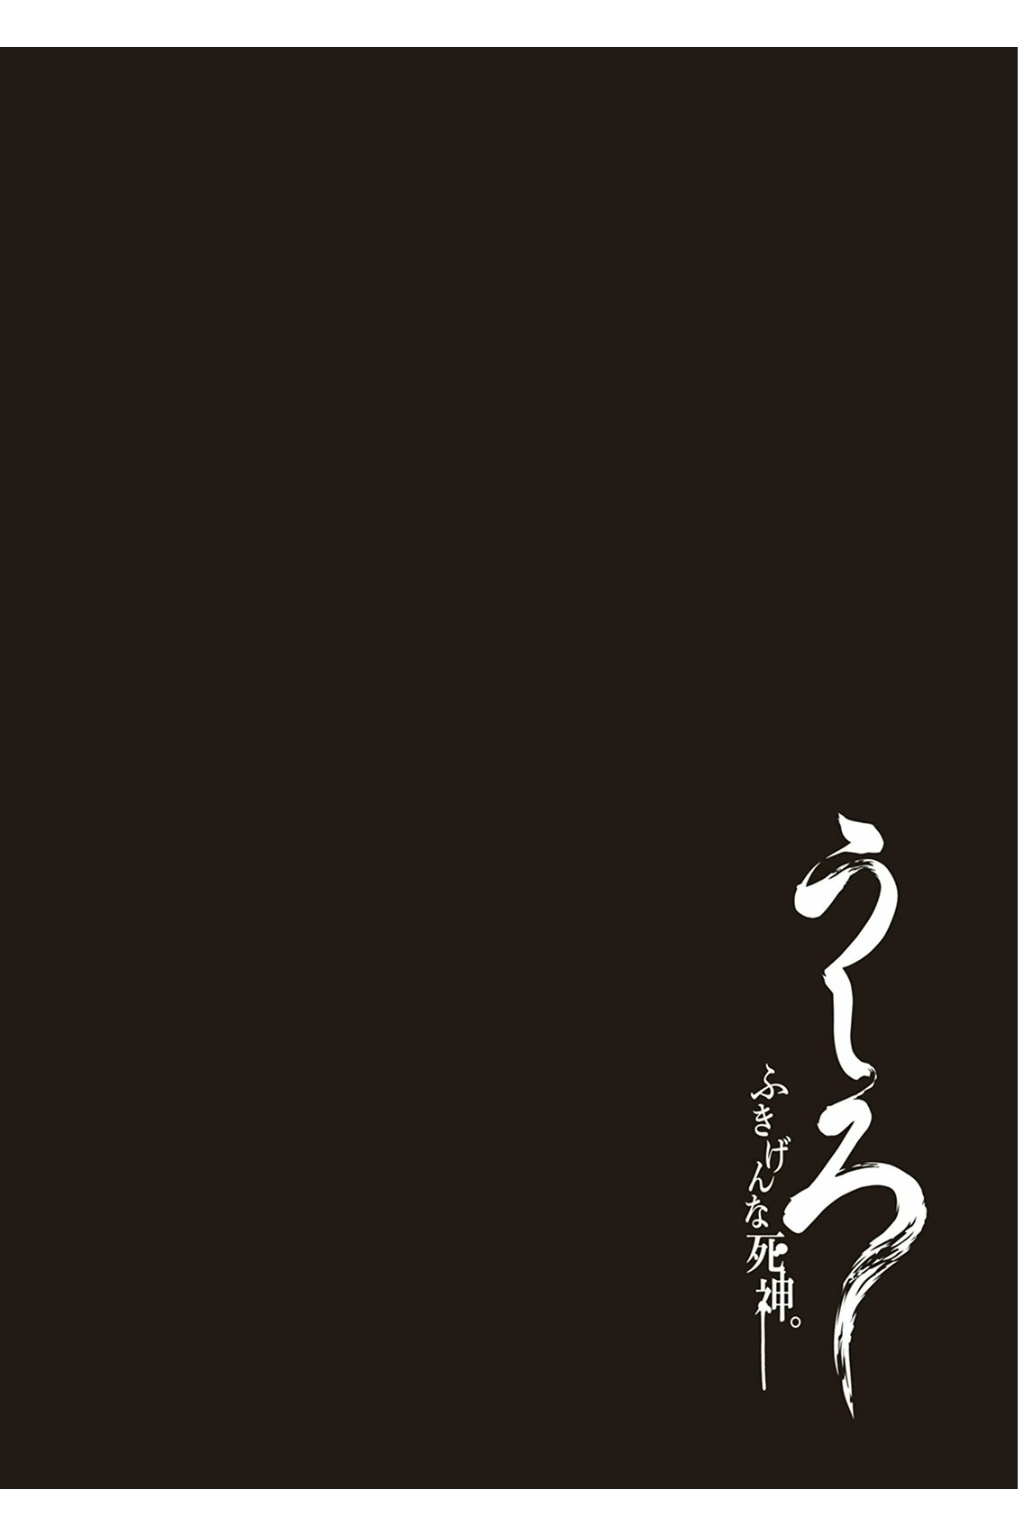 Ushiro The Somber God of Death Vol. 1 Ch. 3